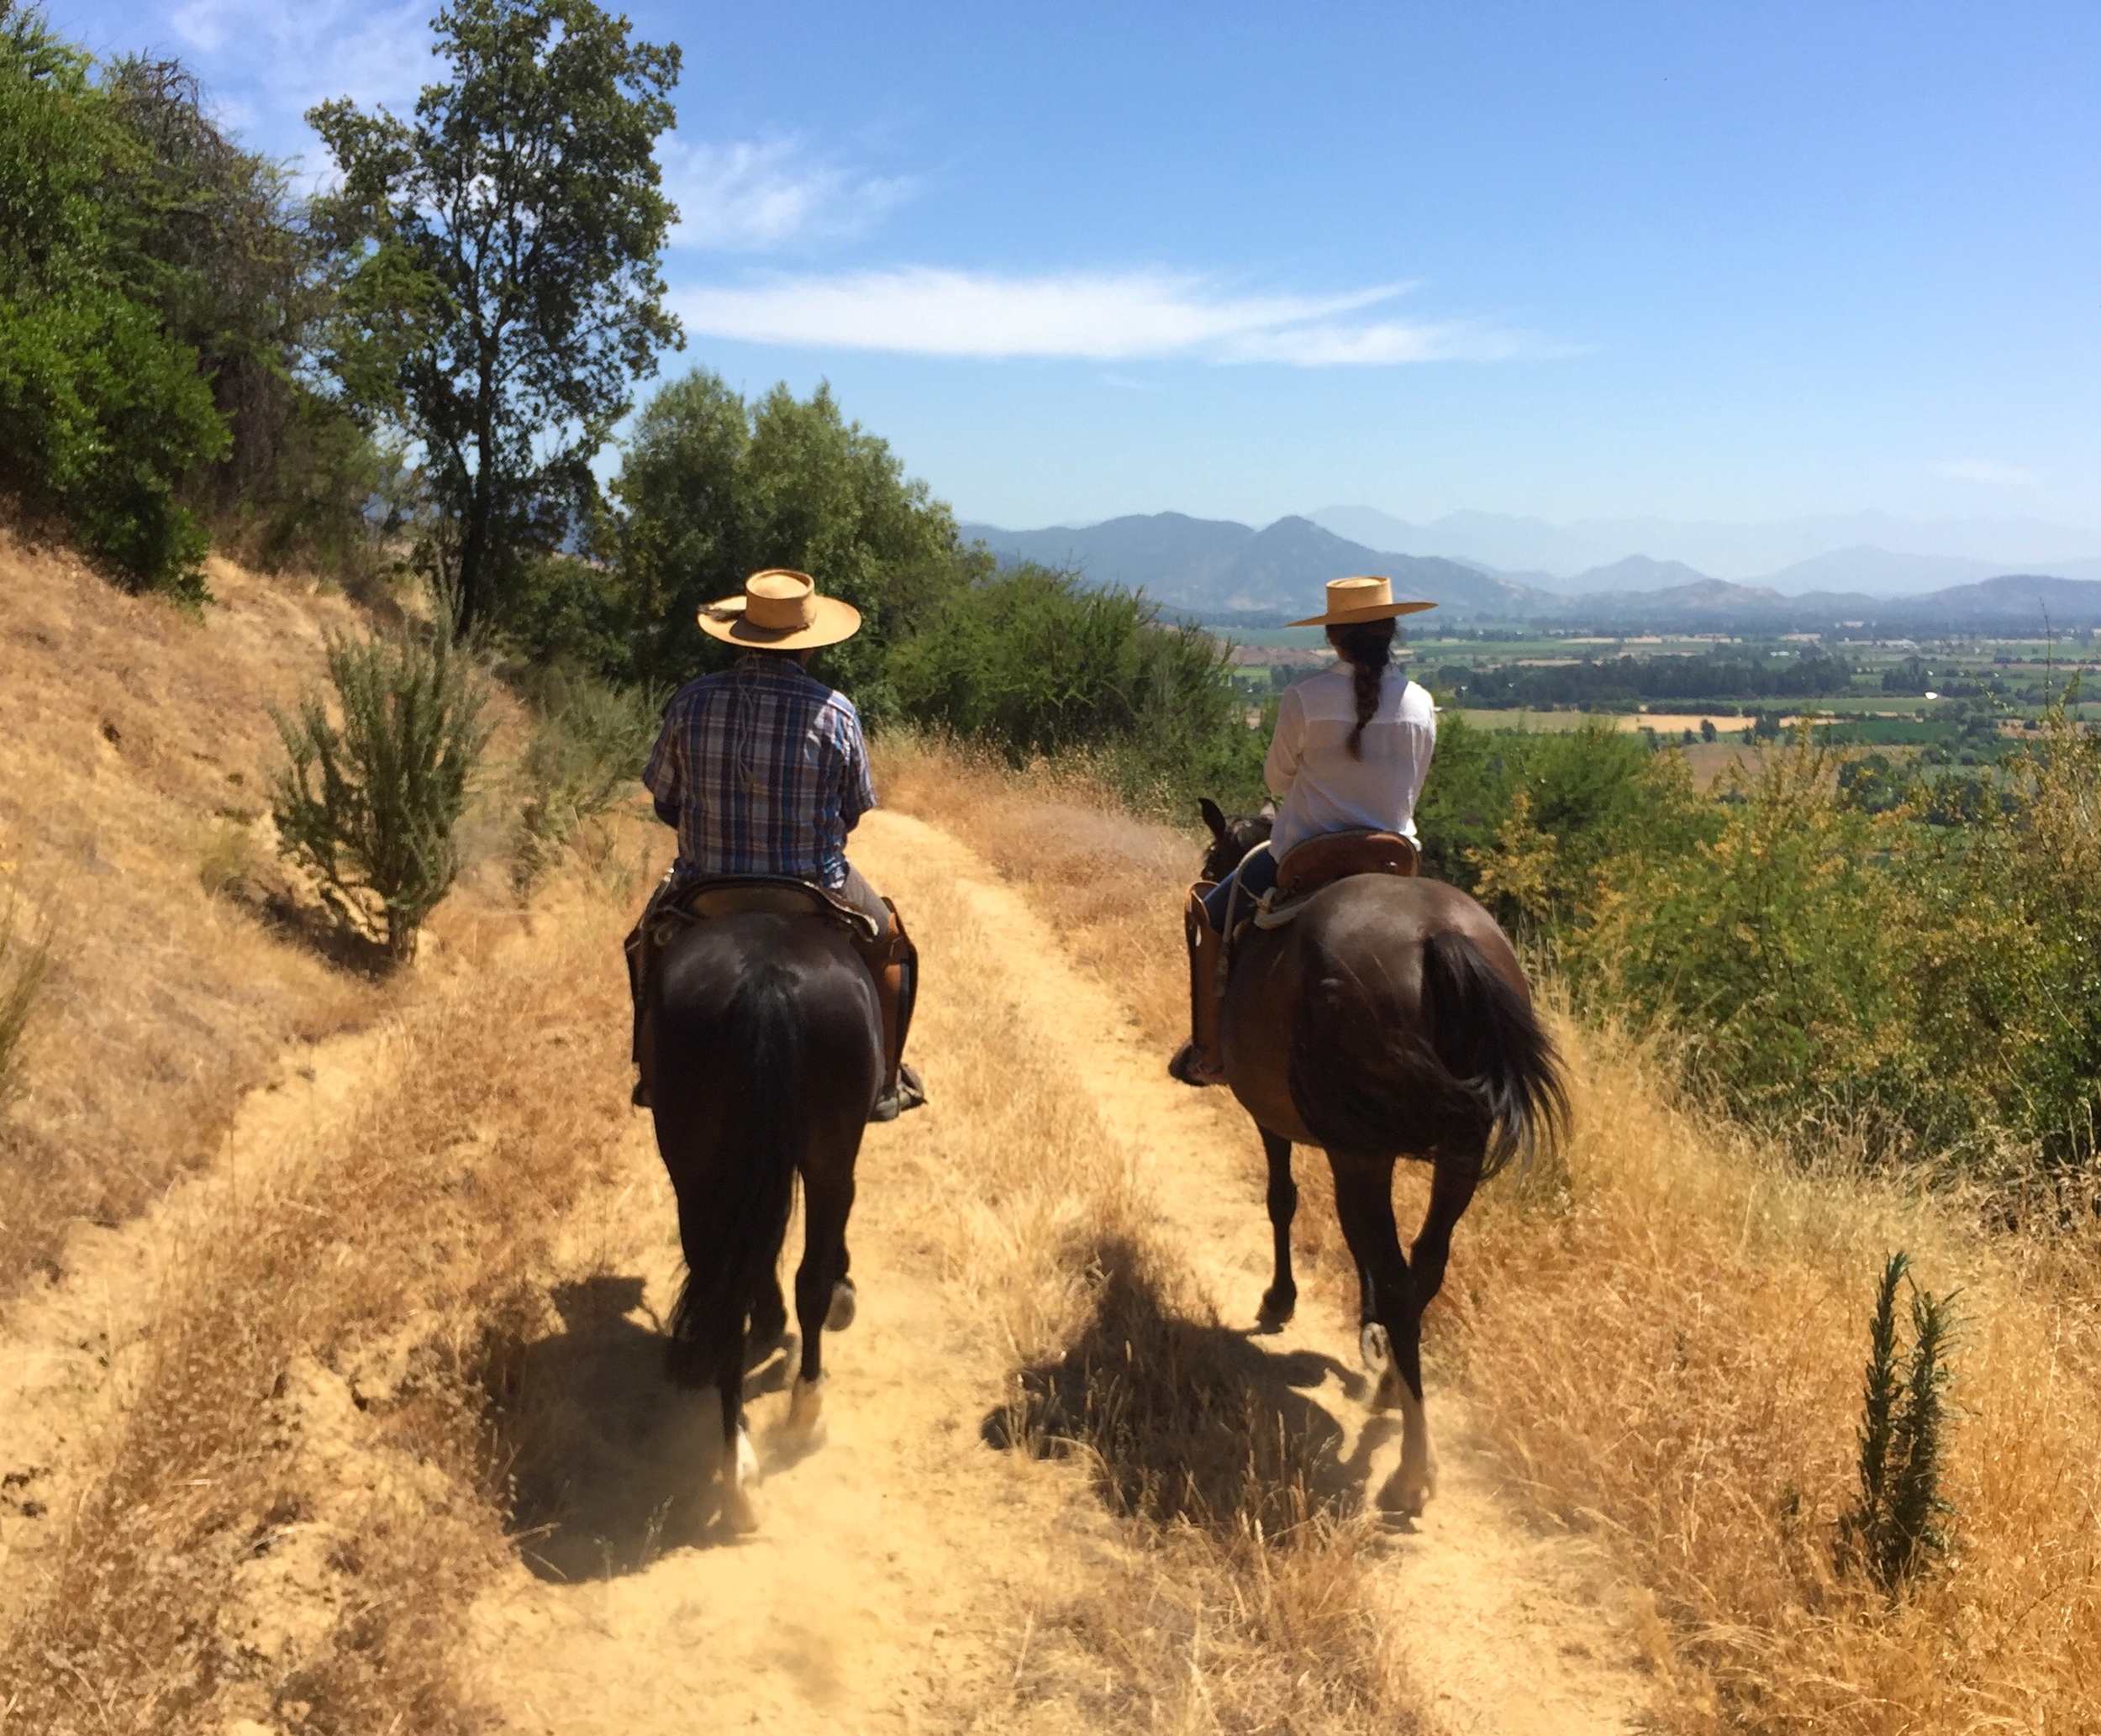 Daytripper365--Horseback riding through the vineyards.jpeg